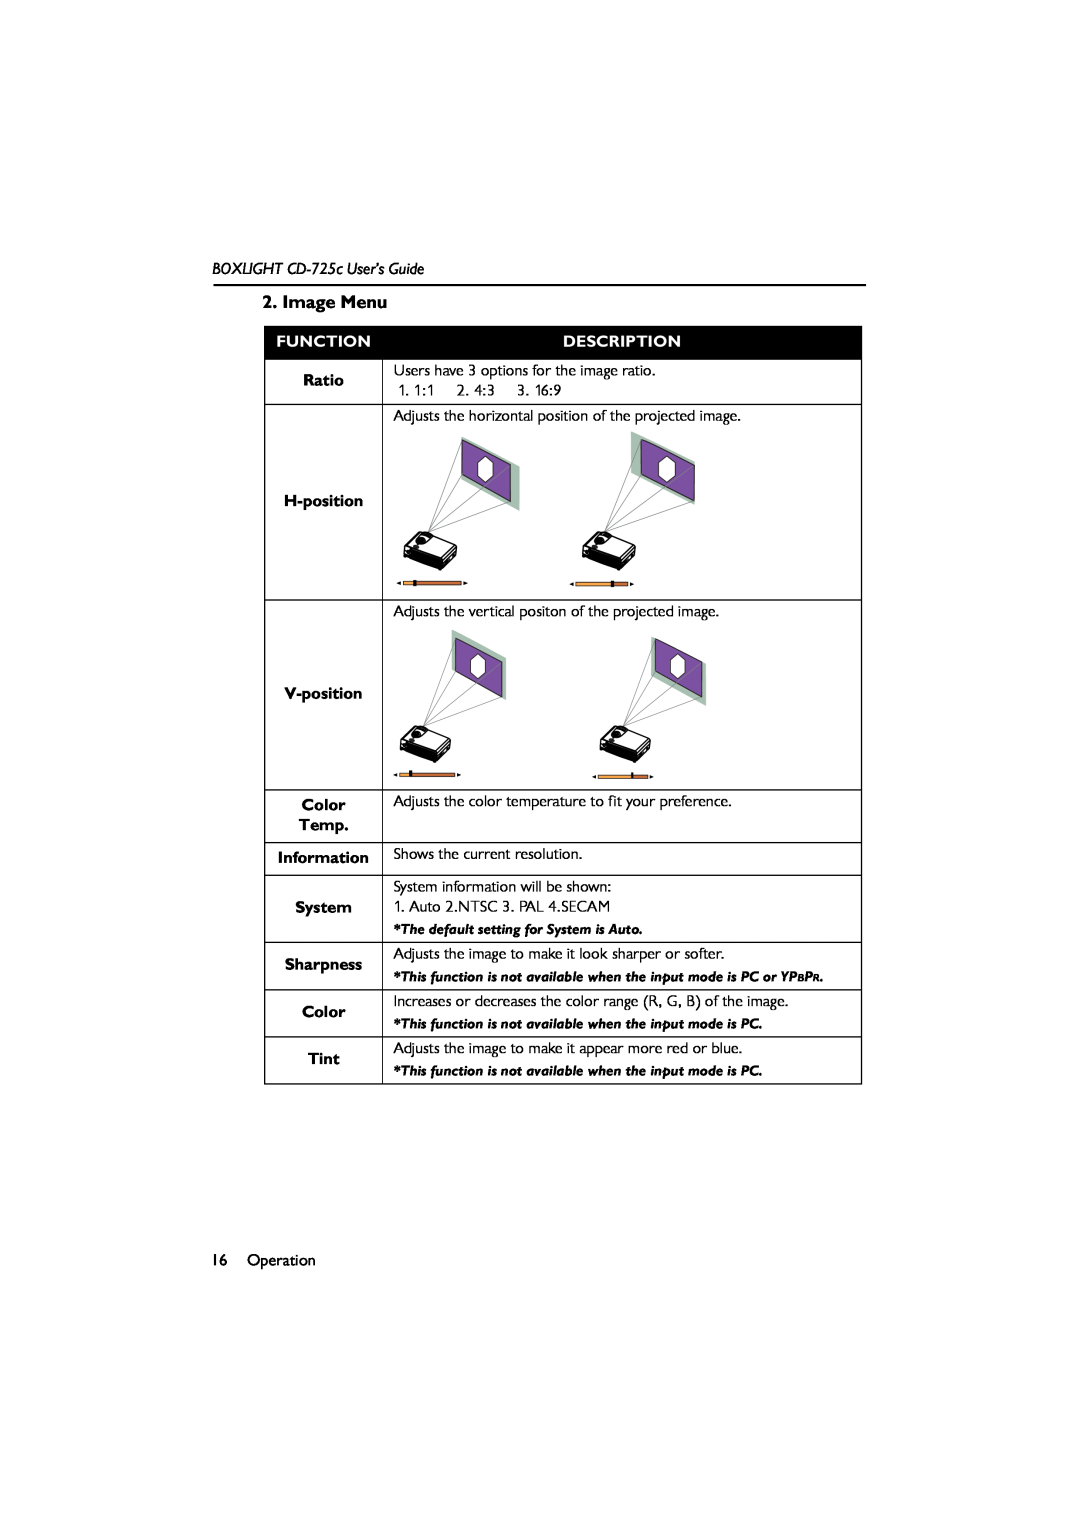 BOXLIGHT manual Image Menu, BOXLIGHT CD-725c User’s Guide, Function, Description 